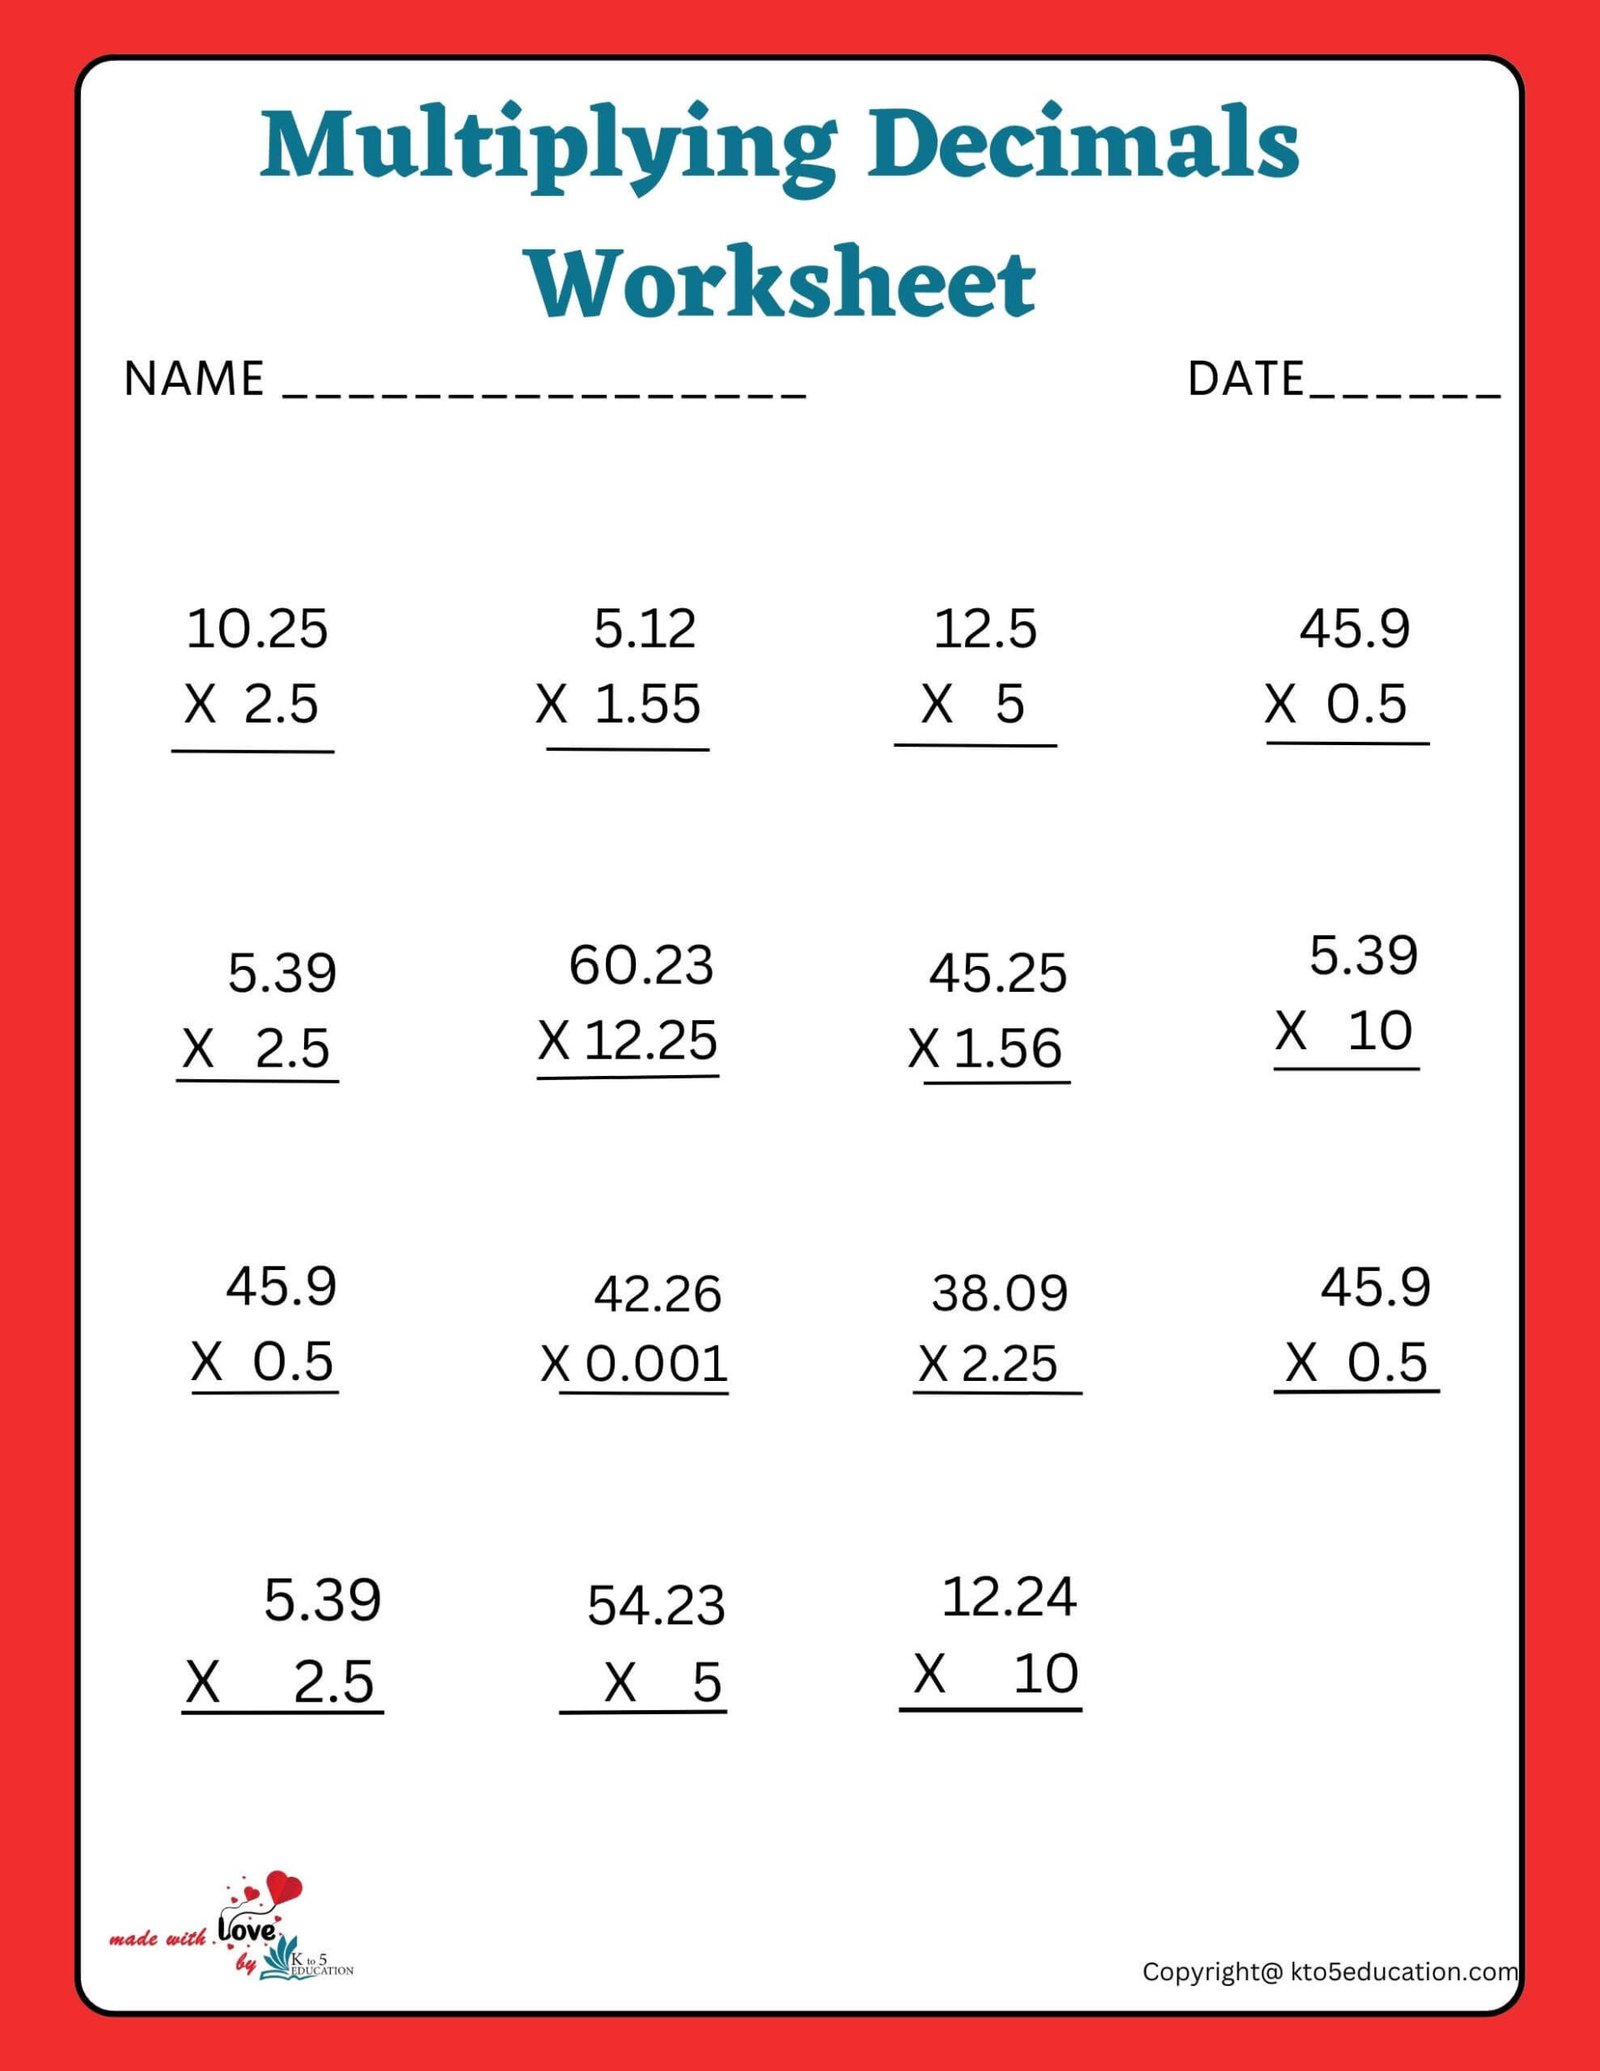 multiplying-decimals-by-whole-numbers-worksheet-free